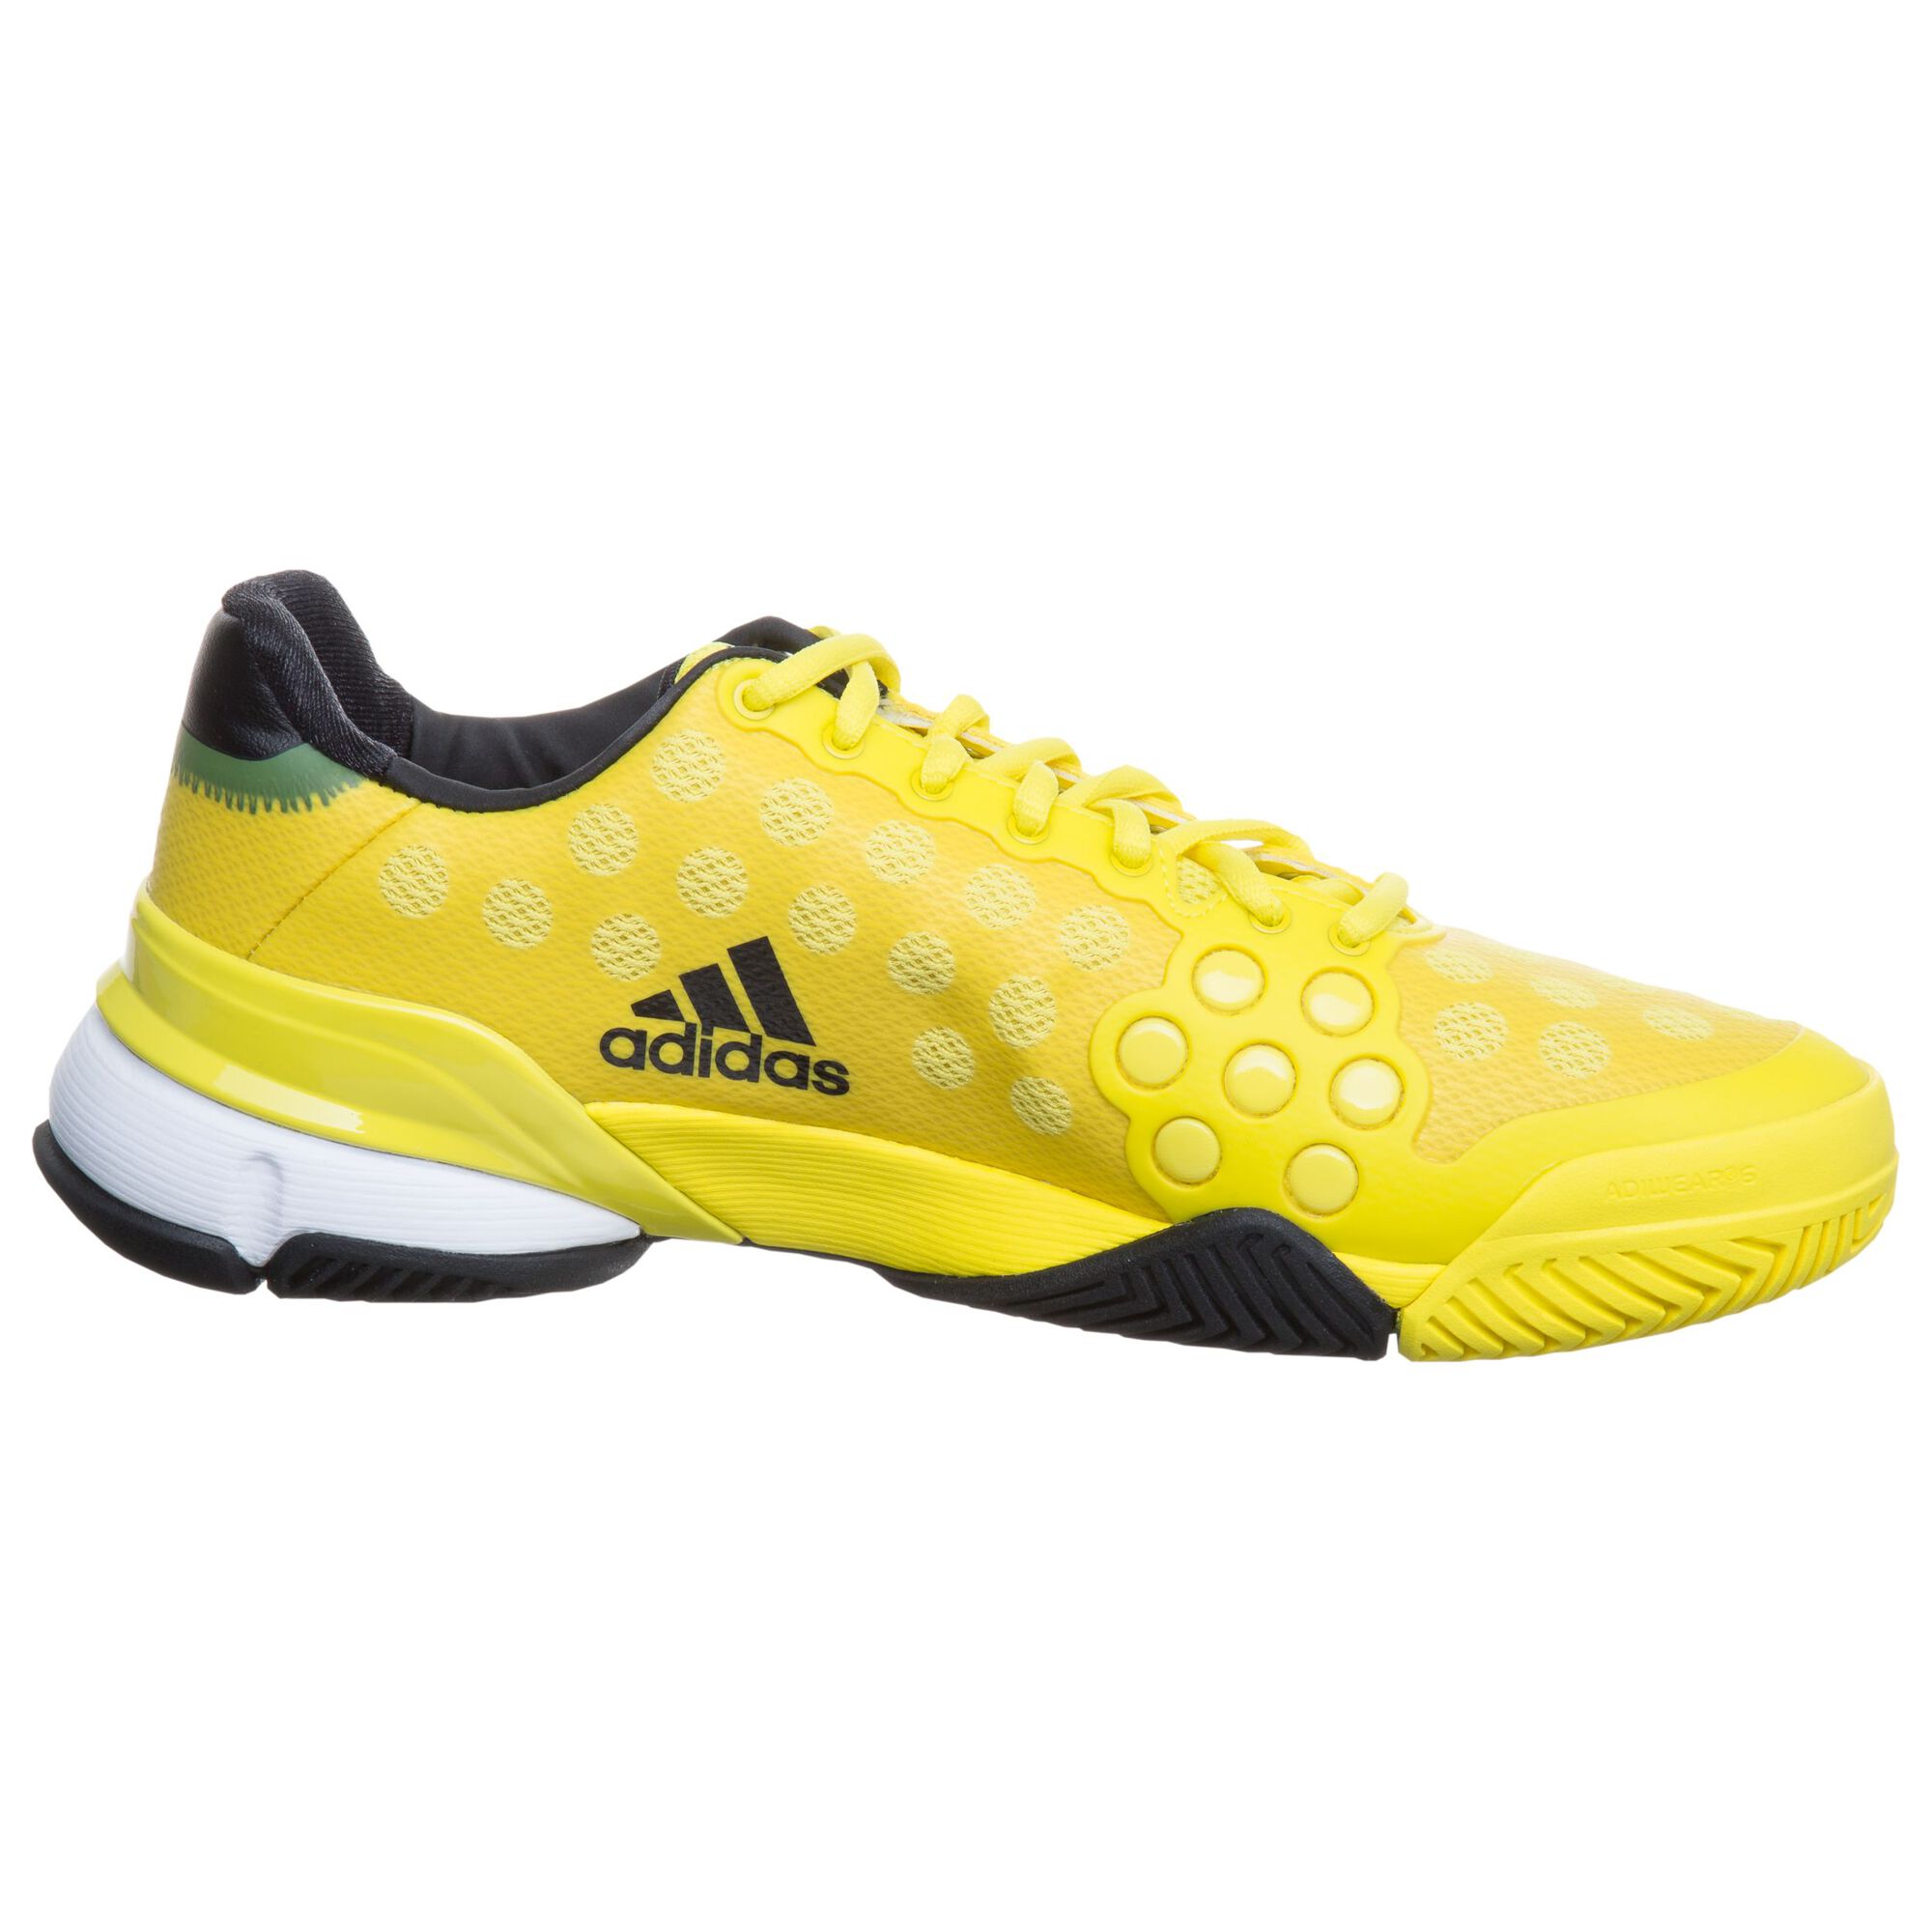 Idioot kolonie Binnenshuis buy adidas Barricade 2015 All Court Shoe Men - Yellow, Black online |  Tennis-Point